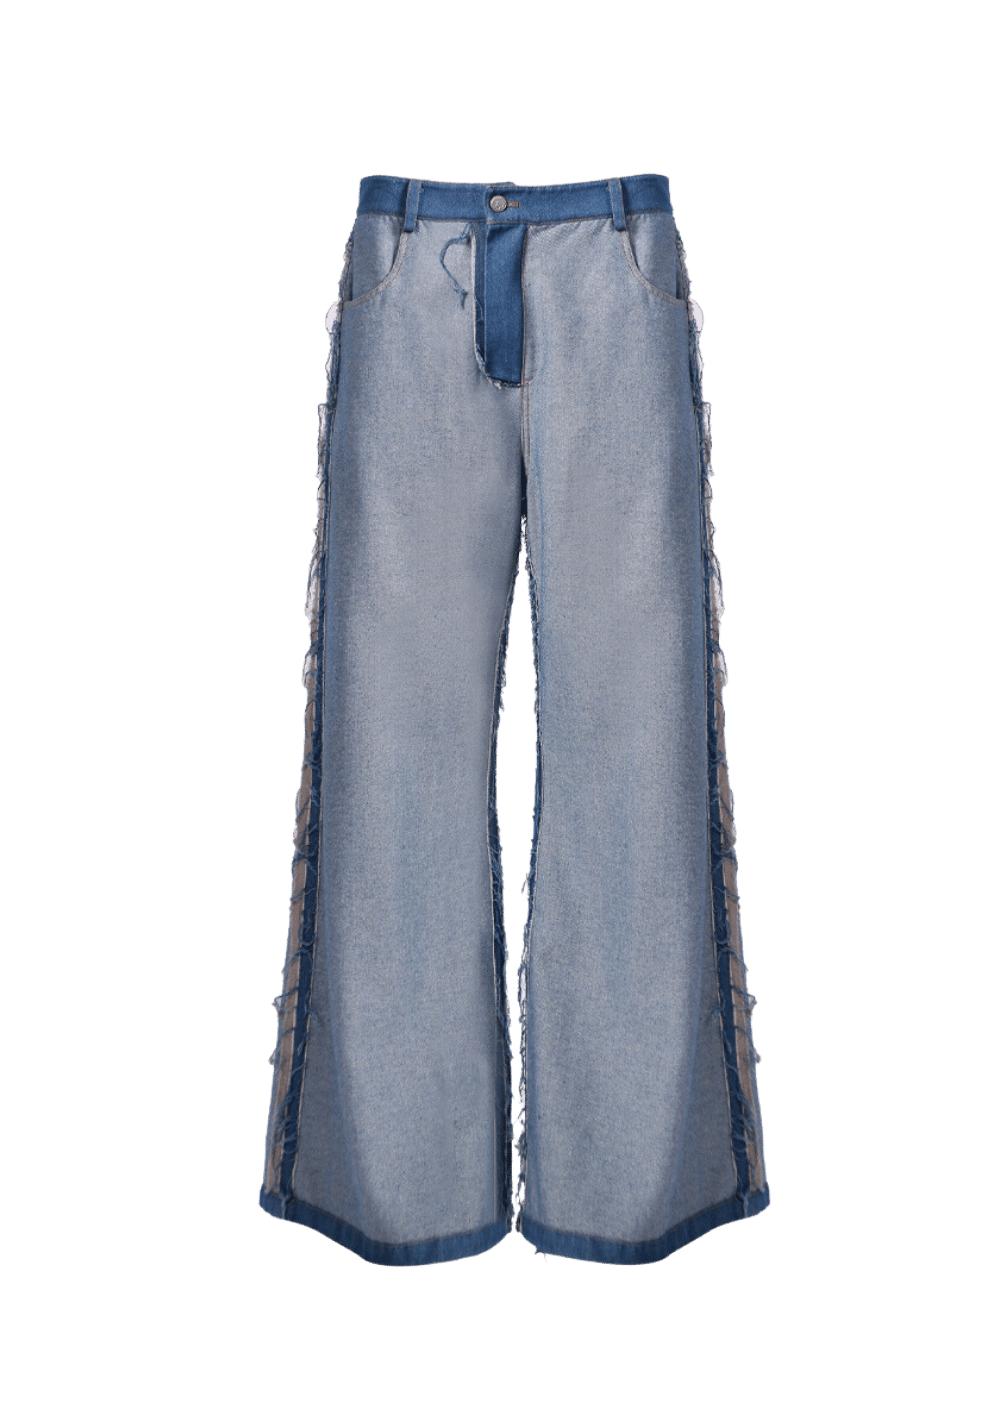 Deconstructed Side Seam Patchwork Jeans - PSYLOS 1, Deconstructed Side Seam Patchwork Jeans, Pants, RELABEL, PSYLOS 1